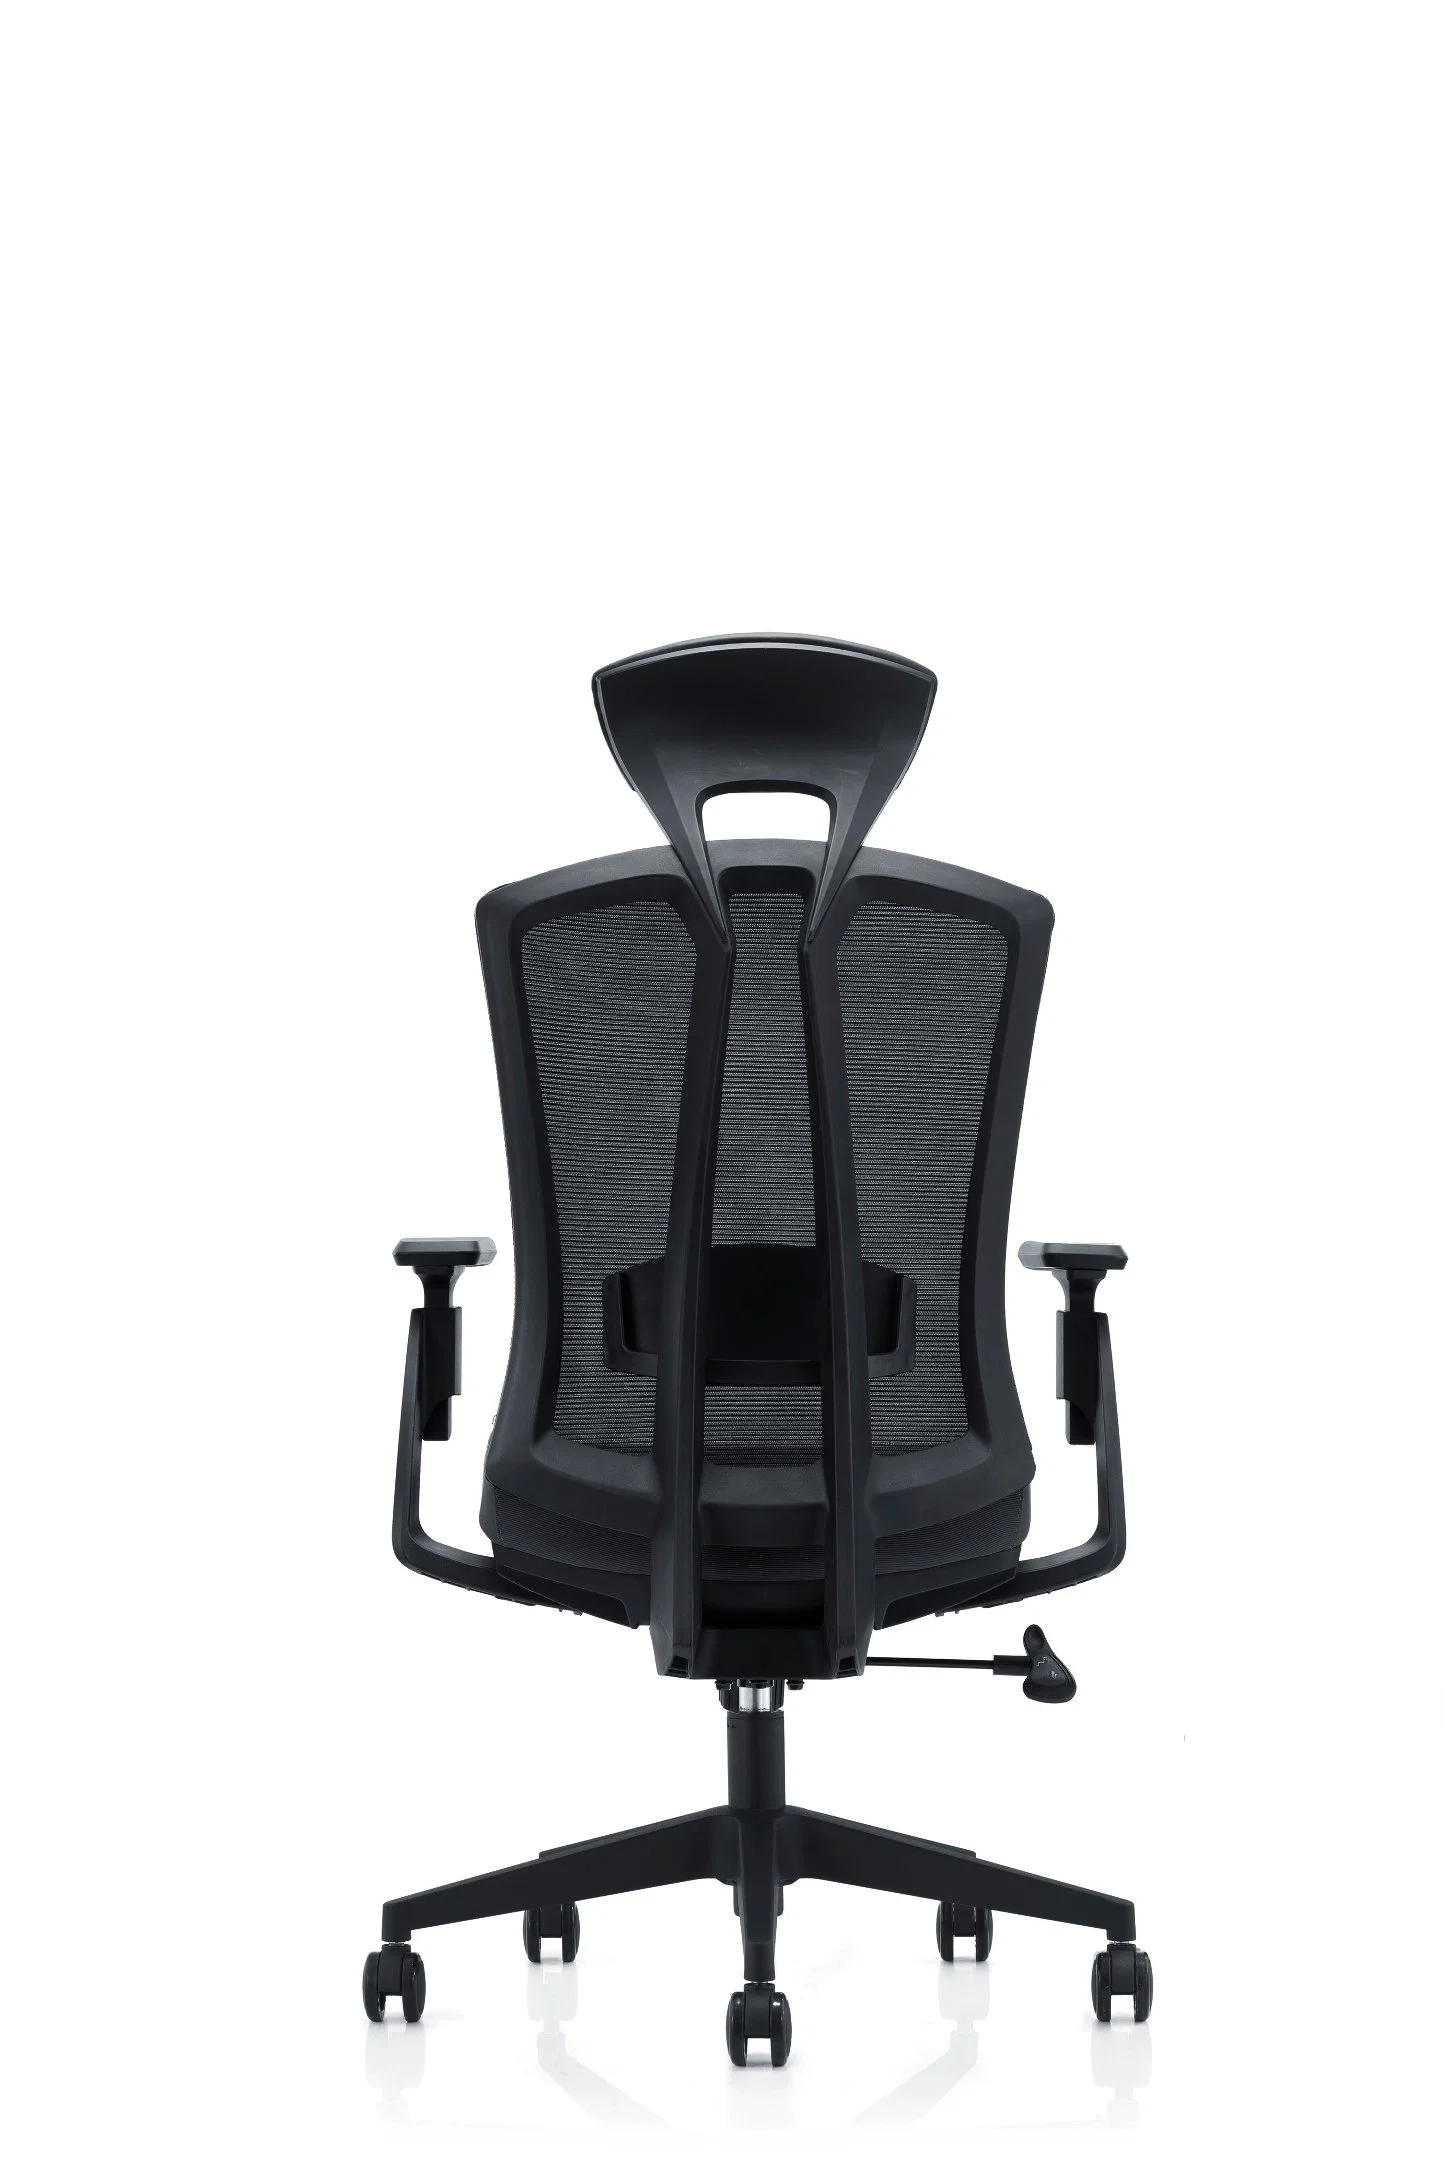 Malla posterior moderna moda Ejecutiva Oficina ergonómica giratoria ajustable CEO Boss Manager silla con soporte de descanso de la pierna (HY-267)